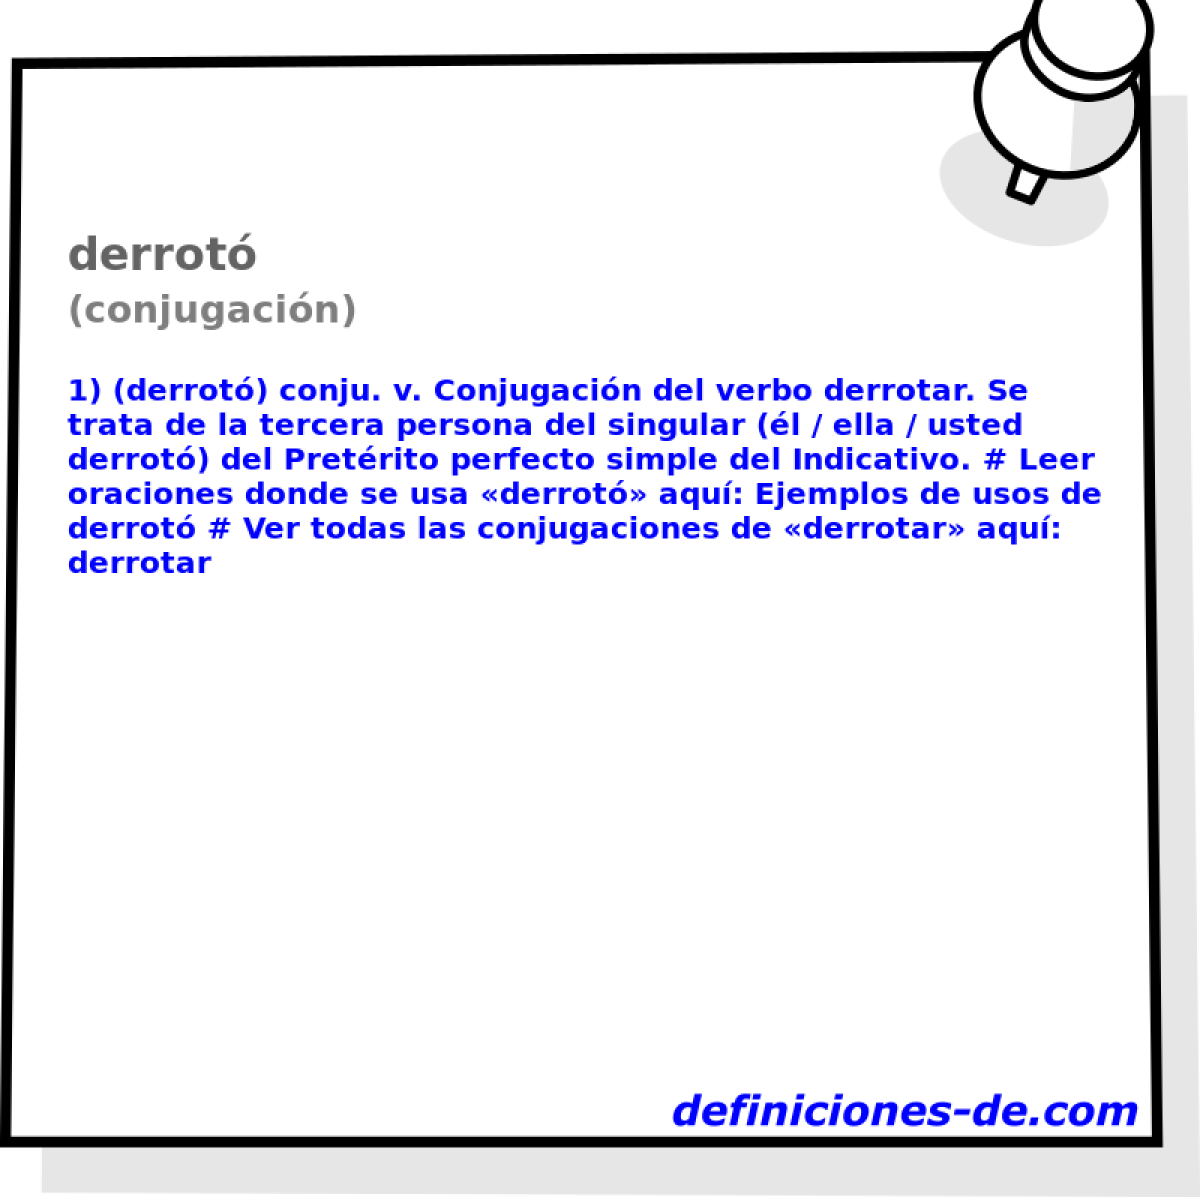 derrot (conjugacin)